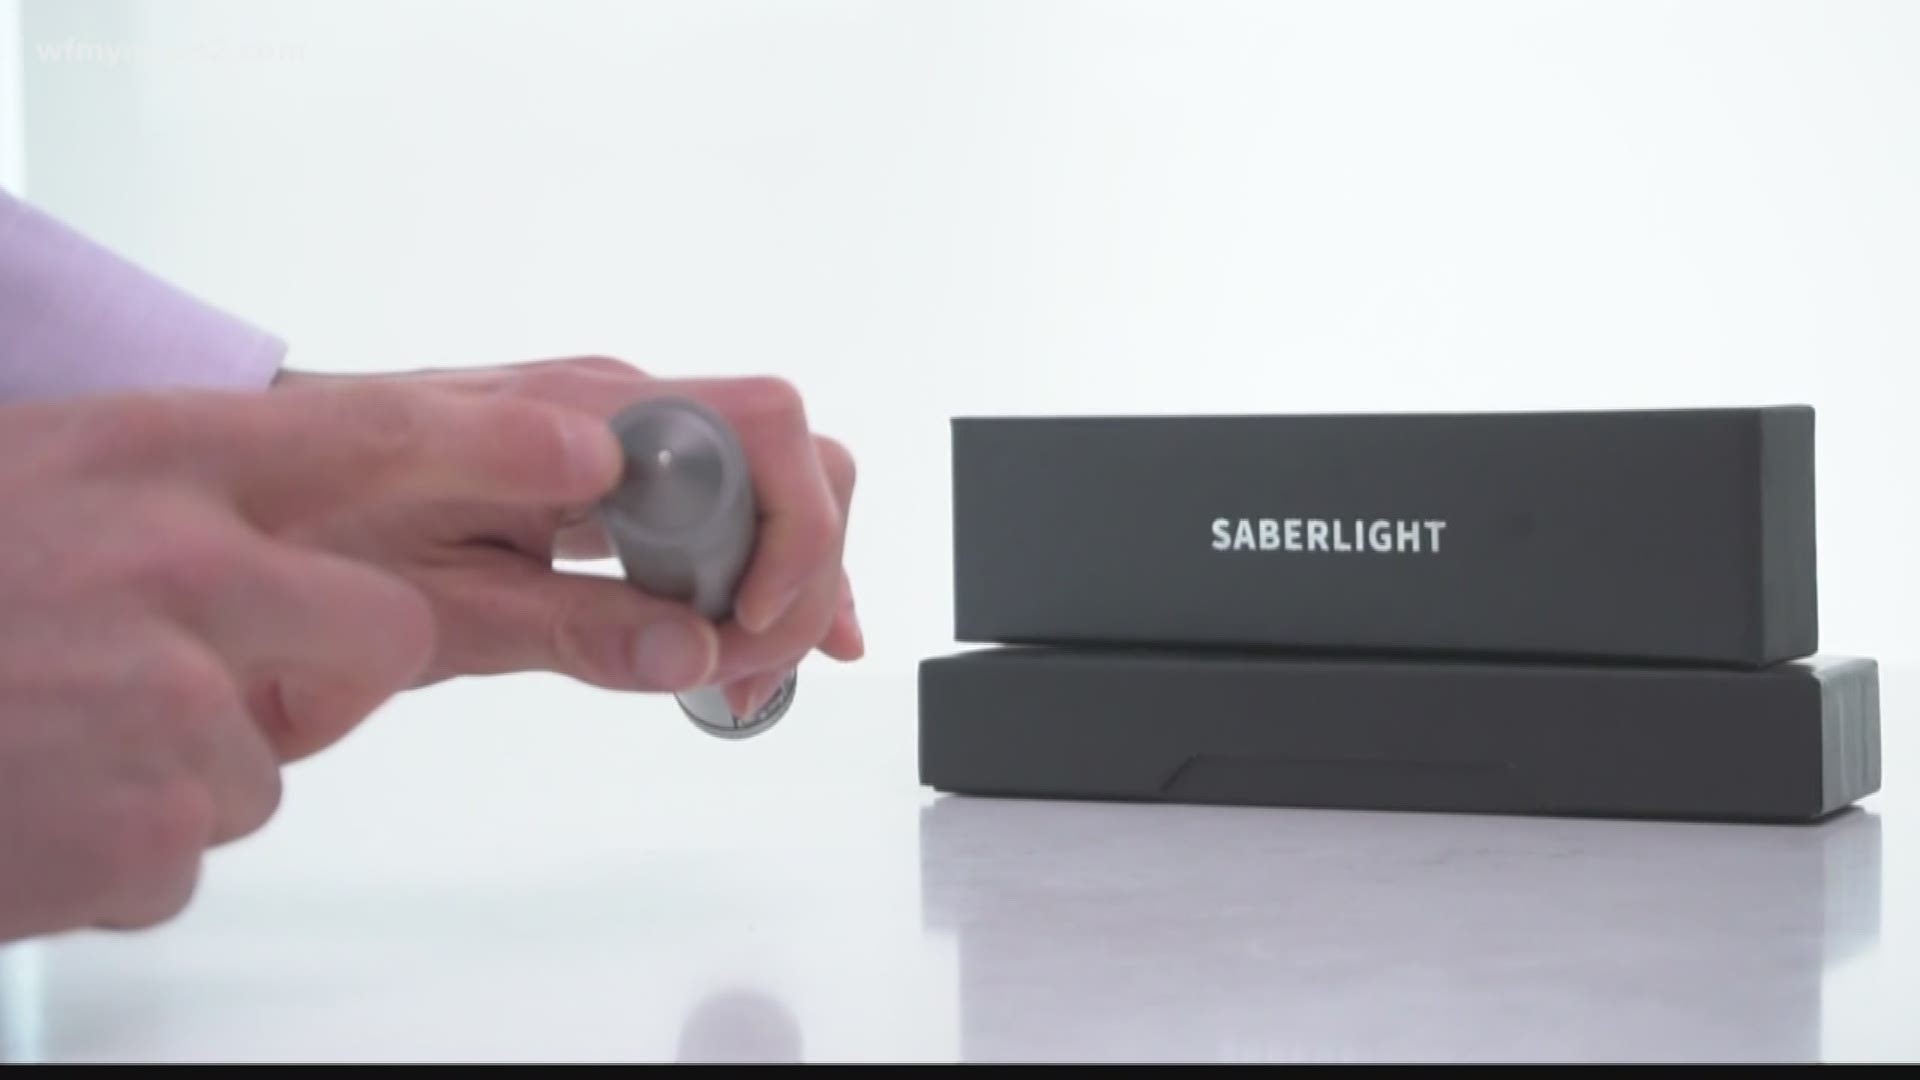 Ways 2 Save: Saberlight